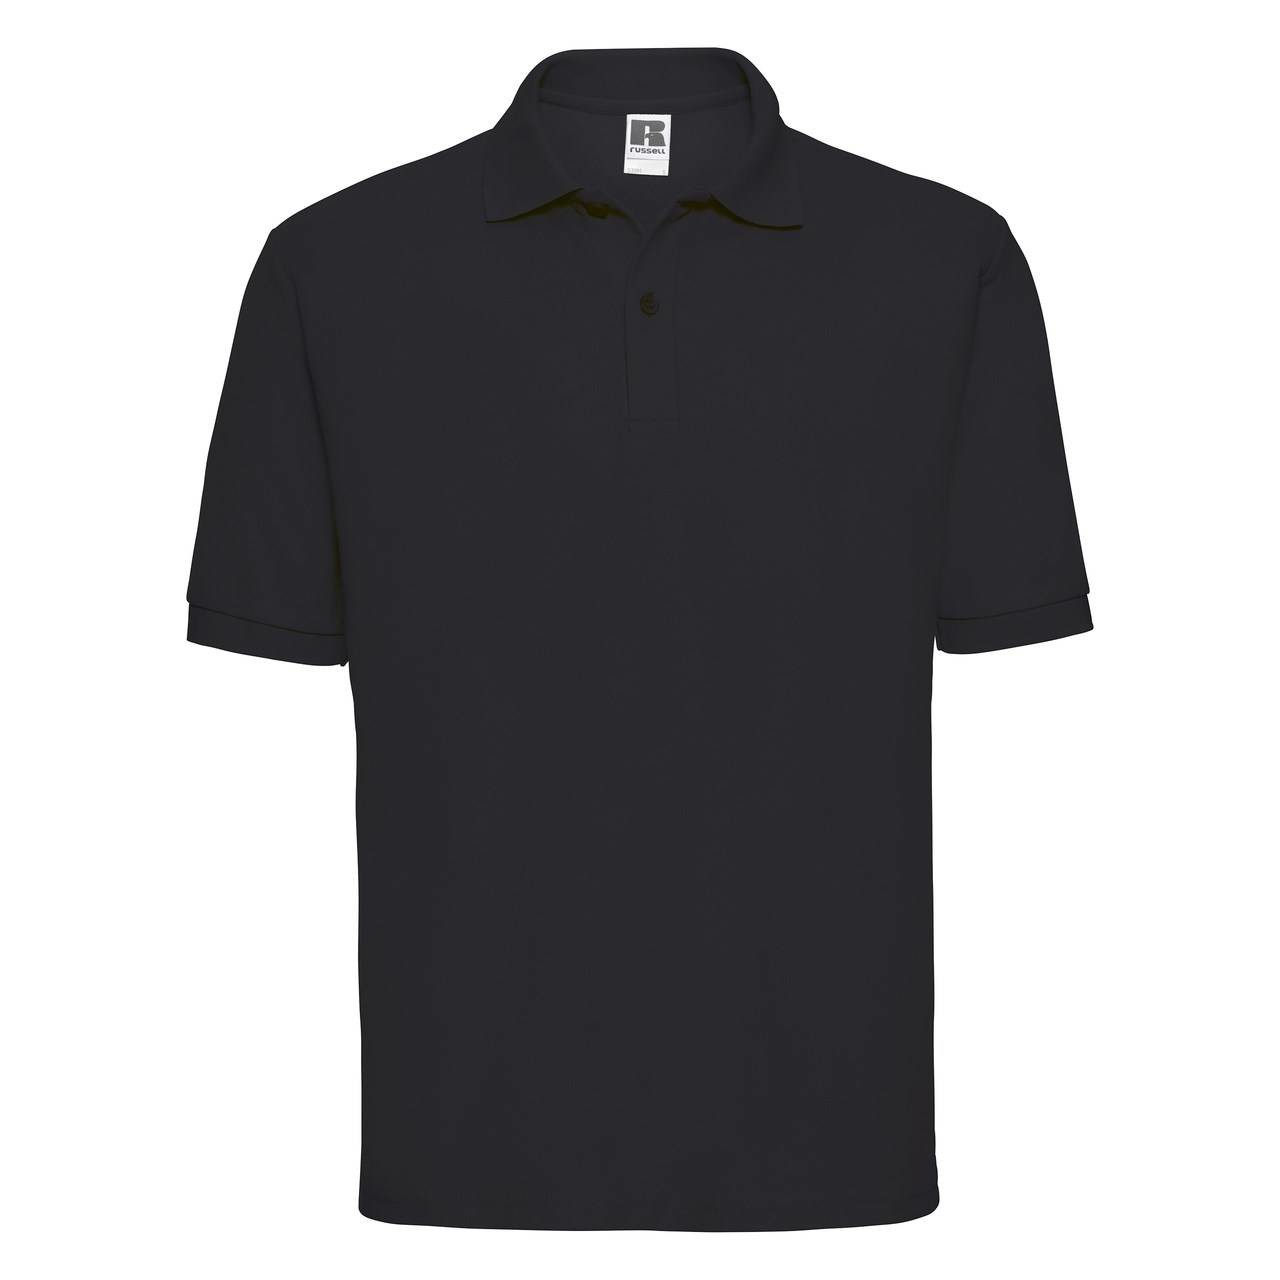 Men's Polycotton Polo Russell Black T-Shirt